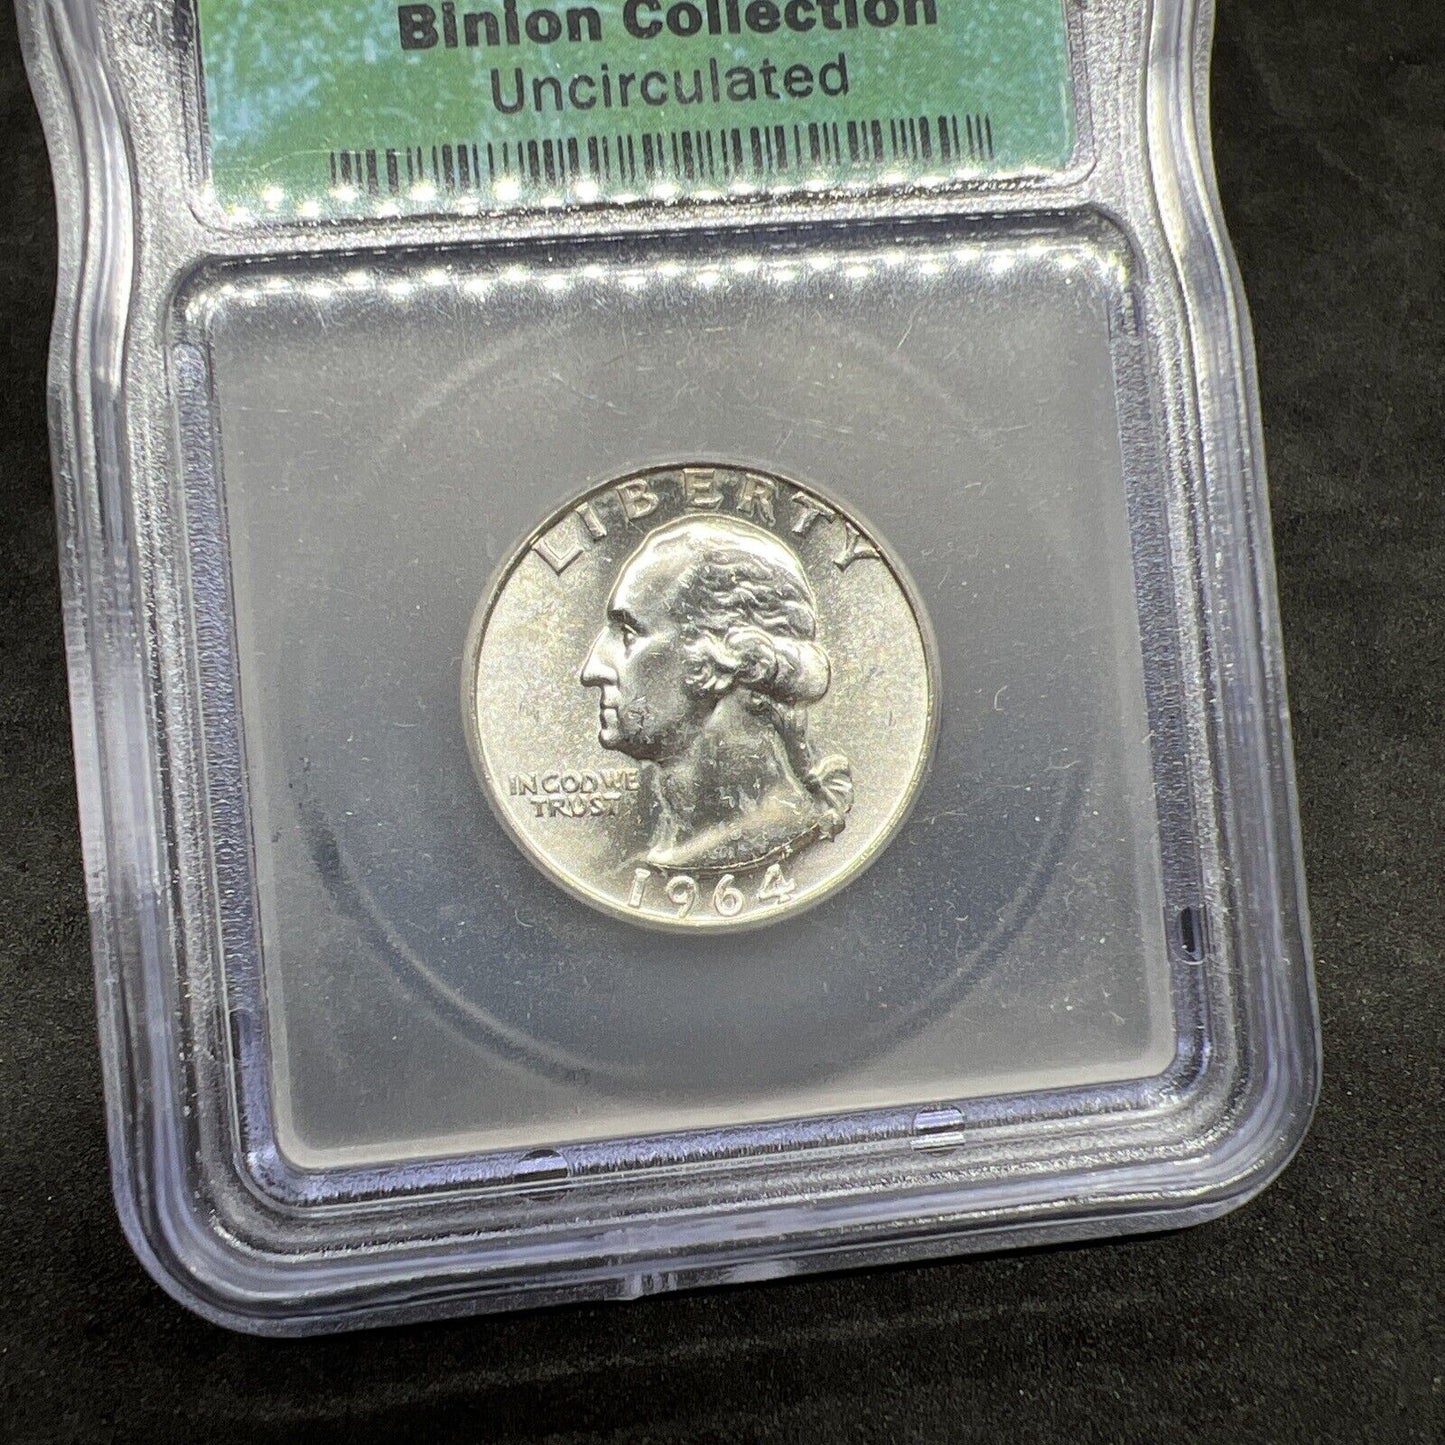 IGC Binion Hoard Mint State UNC Type 1964 P 25c Washington Silver Quarter Coin